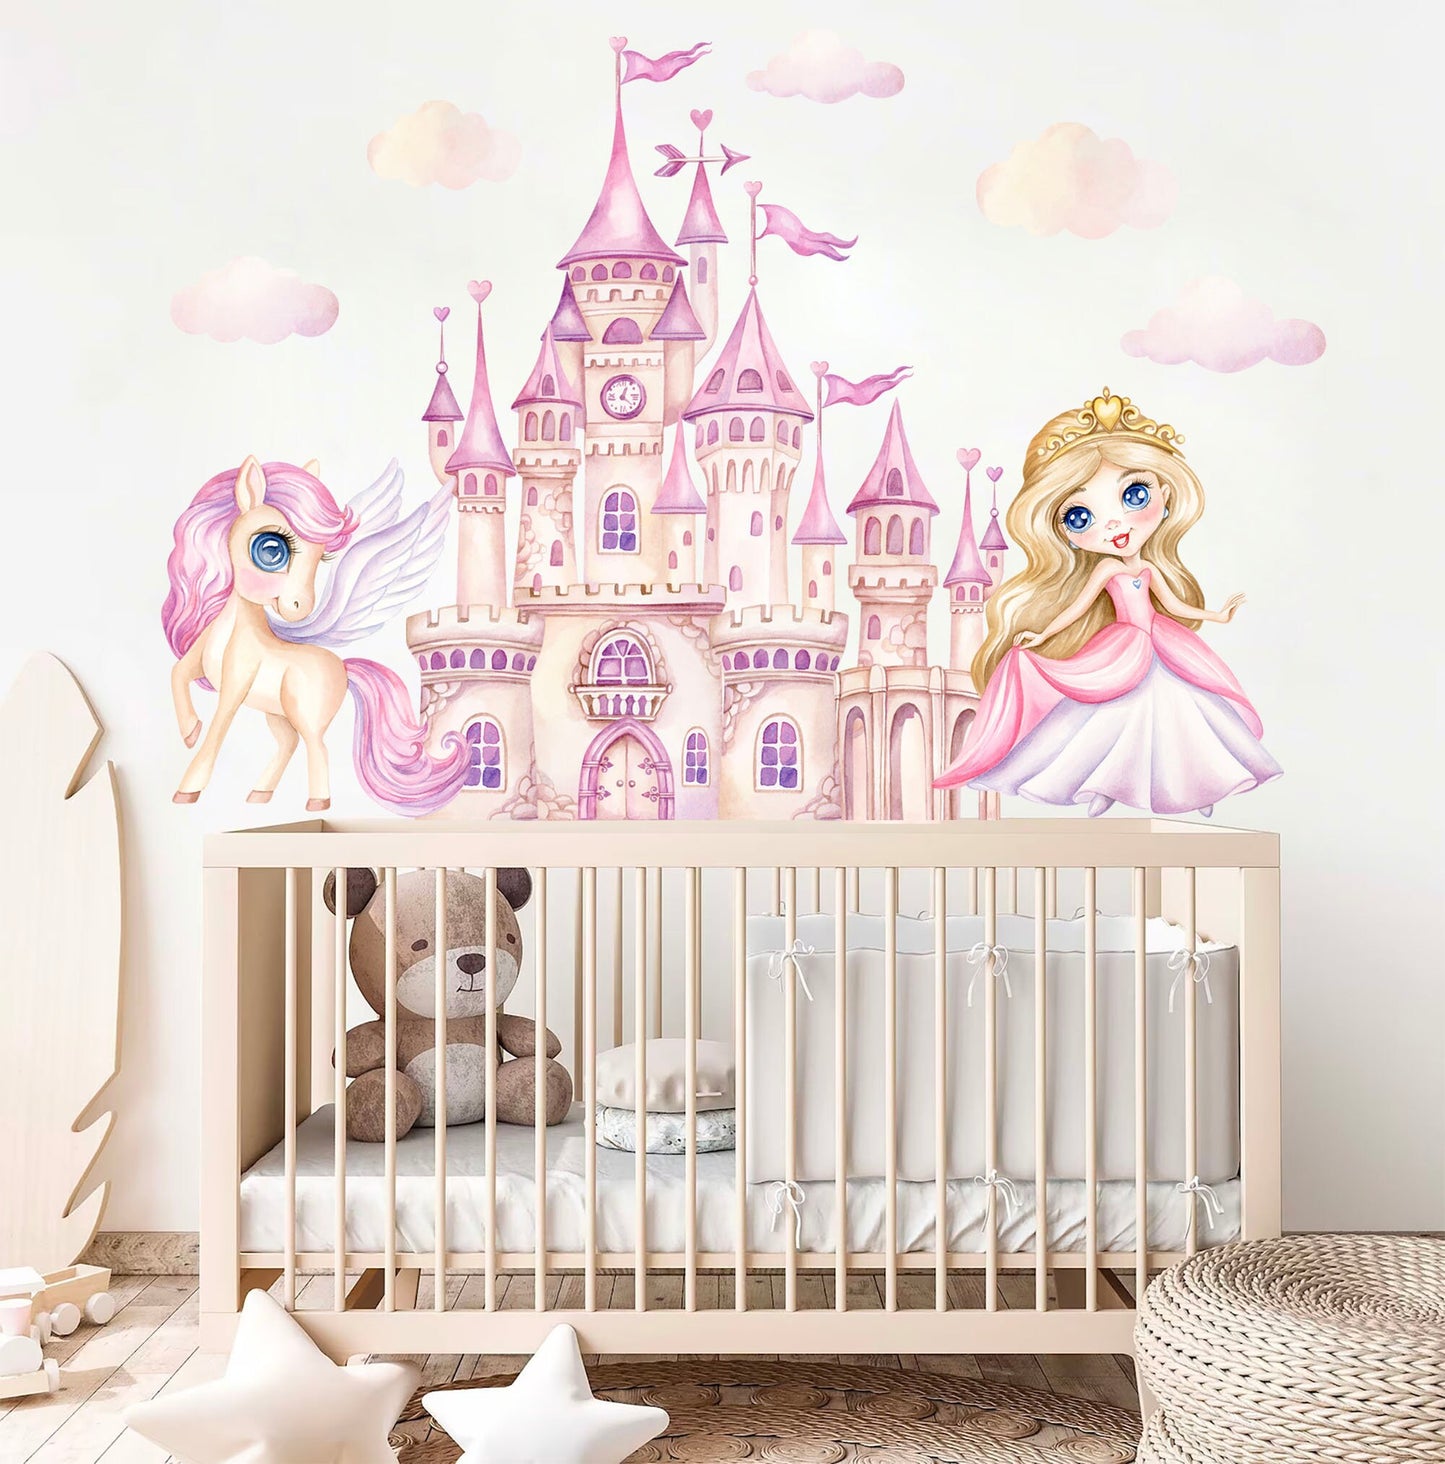 Enchanting Princess Castle & Unicorn Wall Decal for Girls' Room - BR387